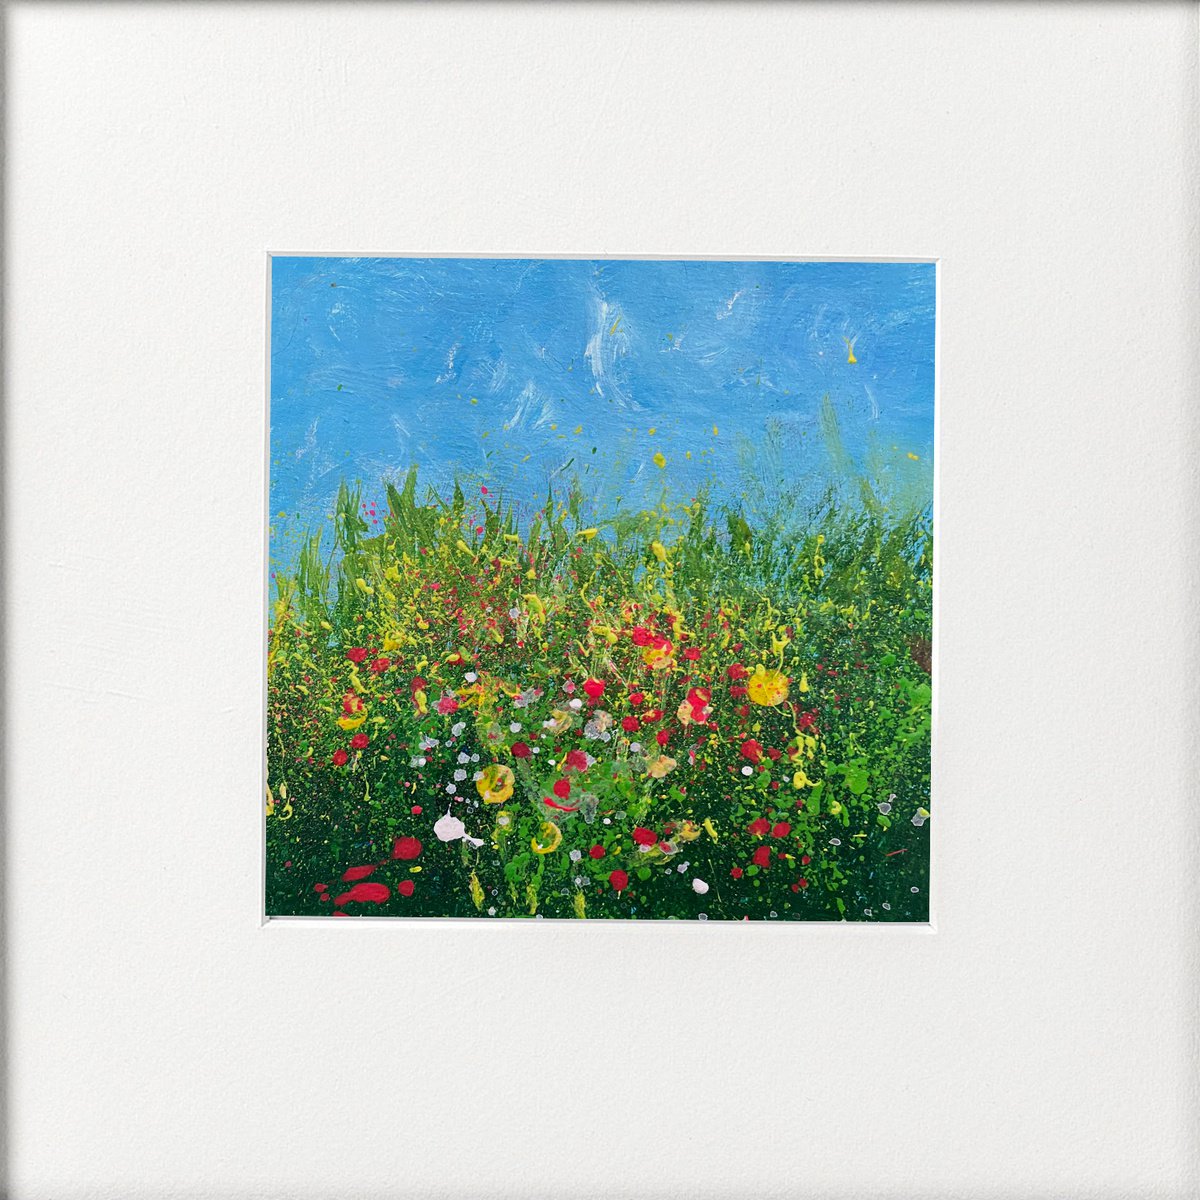 Seasons - High Summer Wildflower Fields by Teresa Tanner